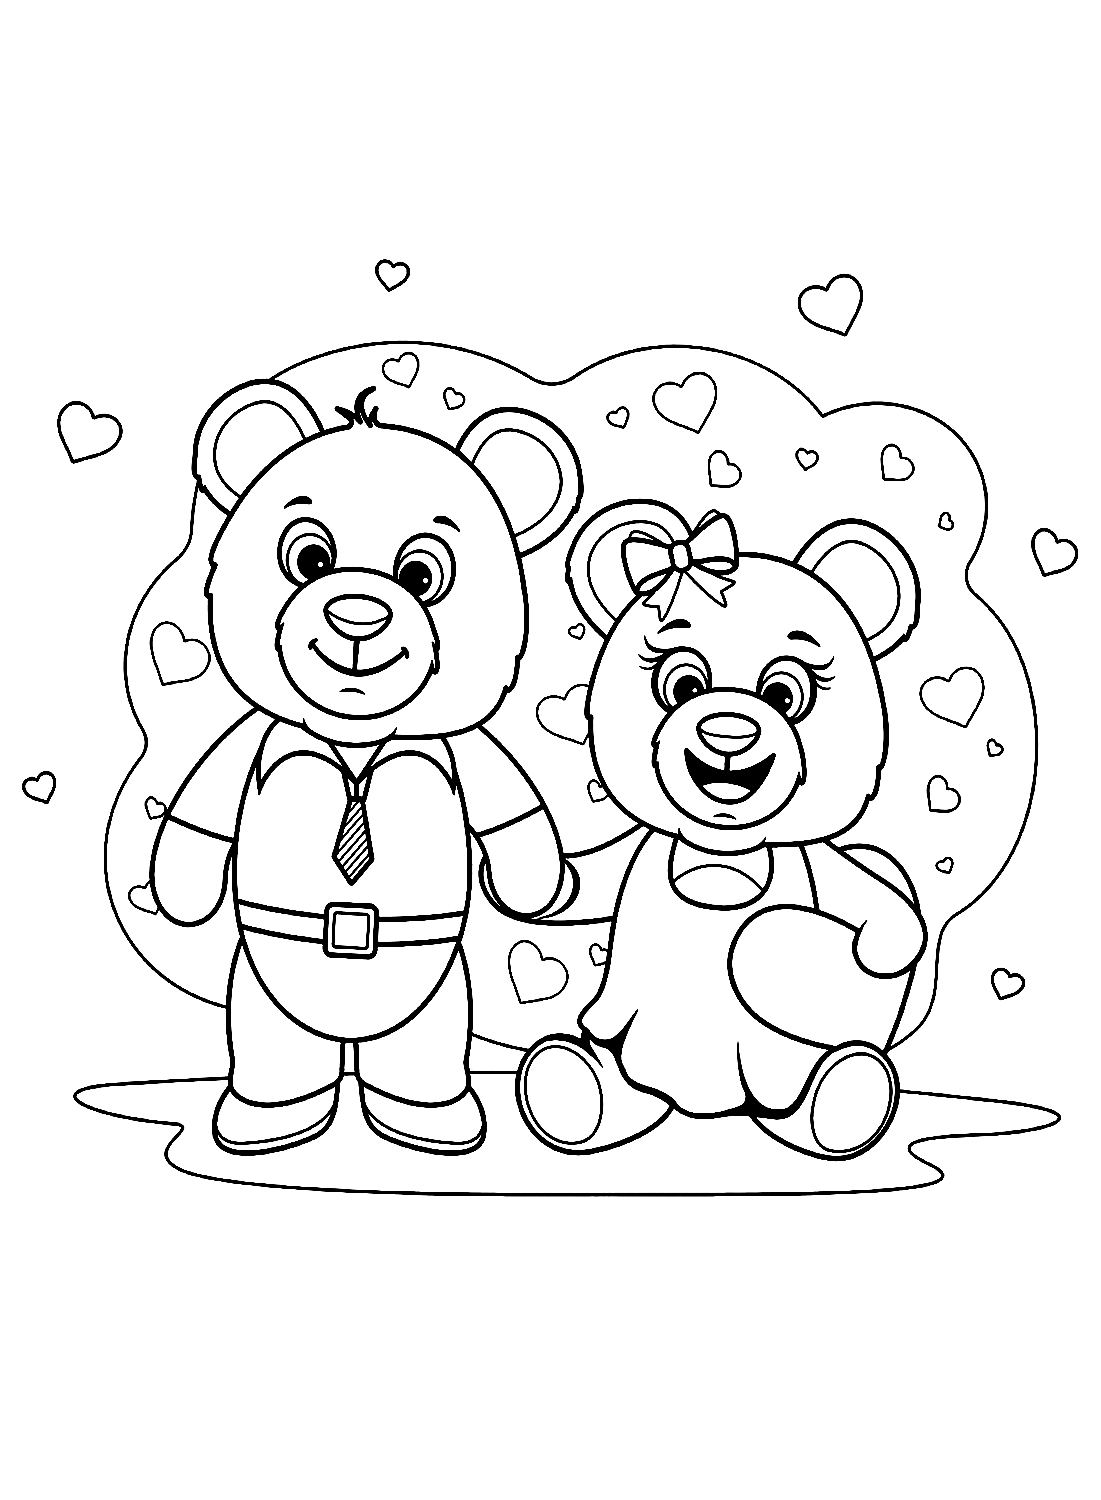 Colorear pareja de ositos de peluche de Teddy Bear